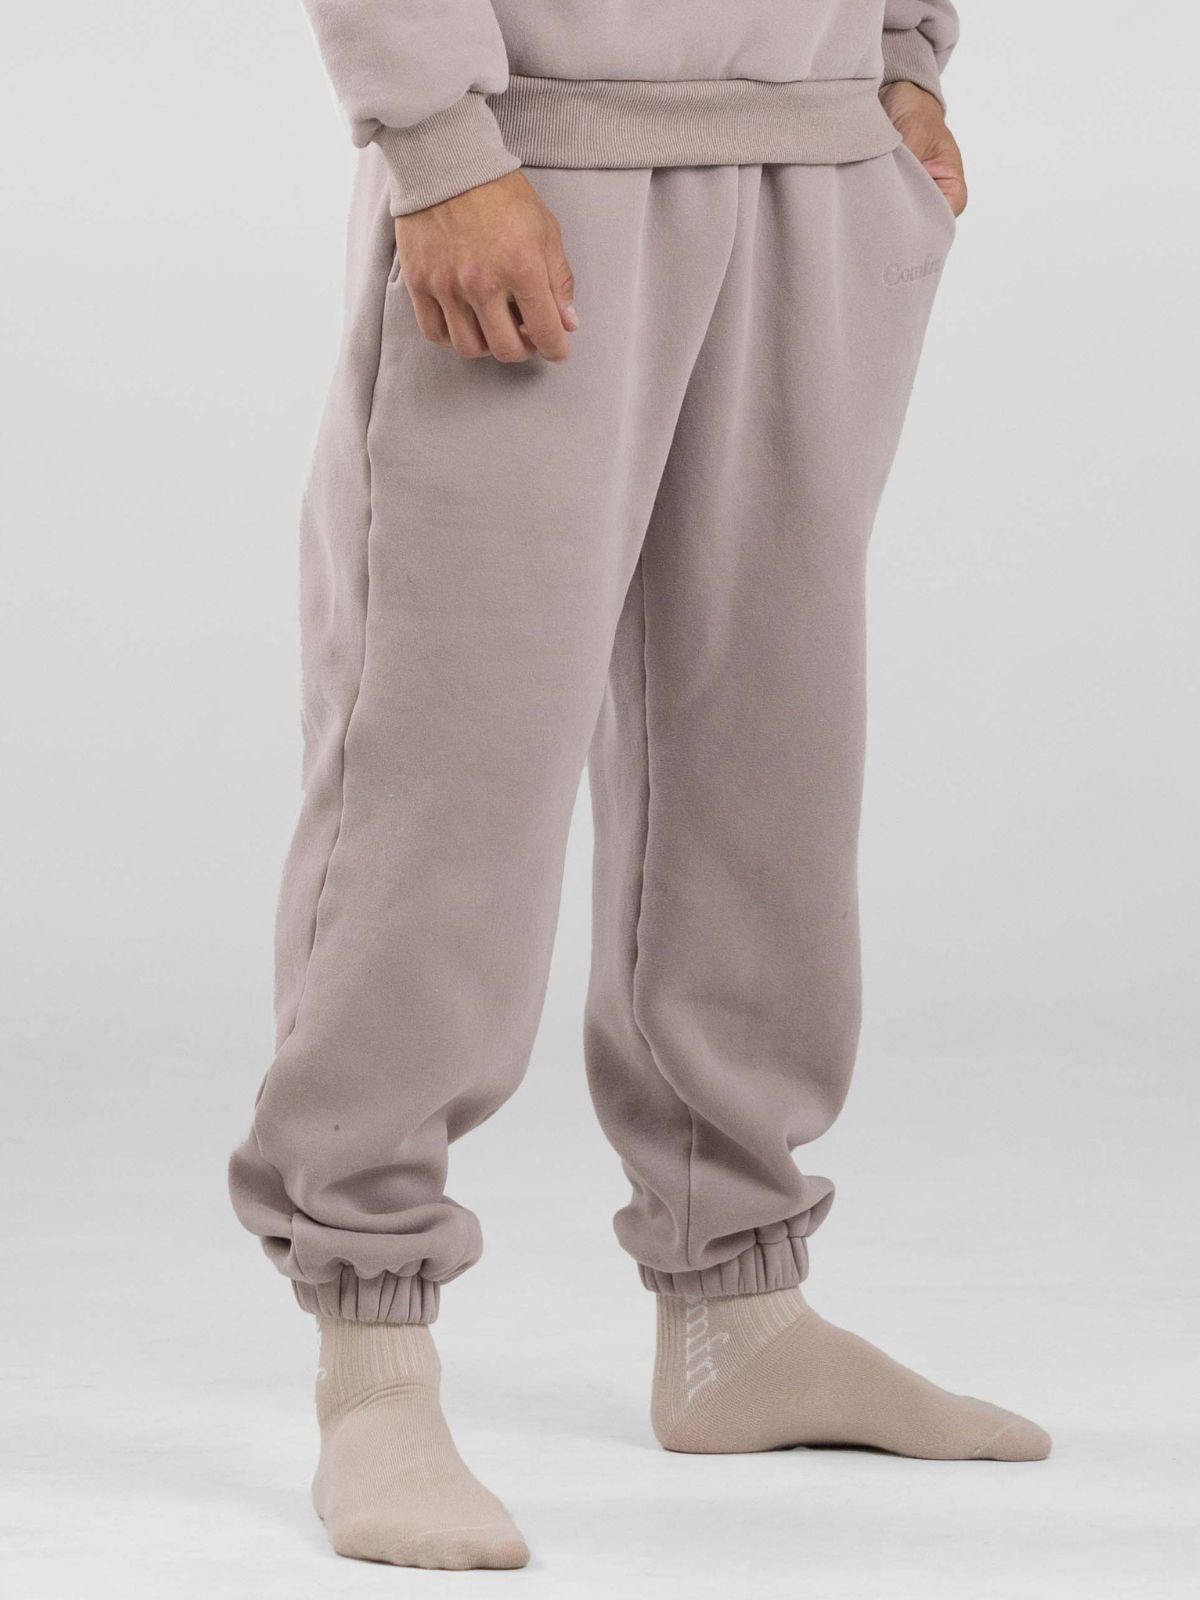 Relaxed Fit Sweatpants - Steel gray - Men